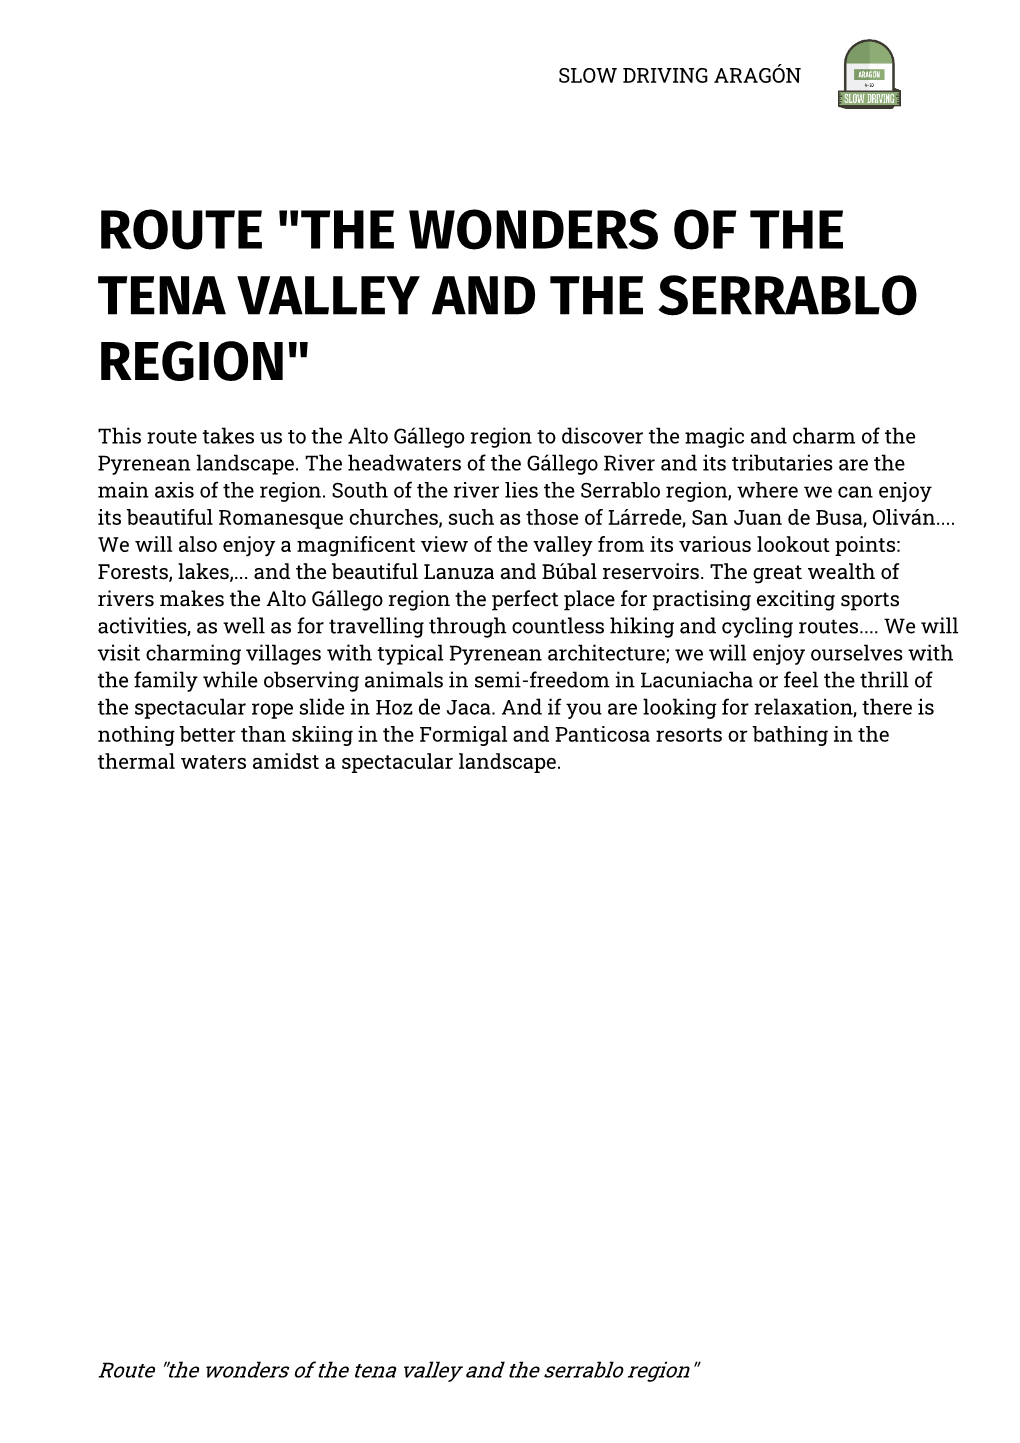 The Wonders of the Tena Valley and the Serrablo Region" SLOW DRIVING ARAGÓN